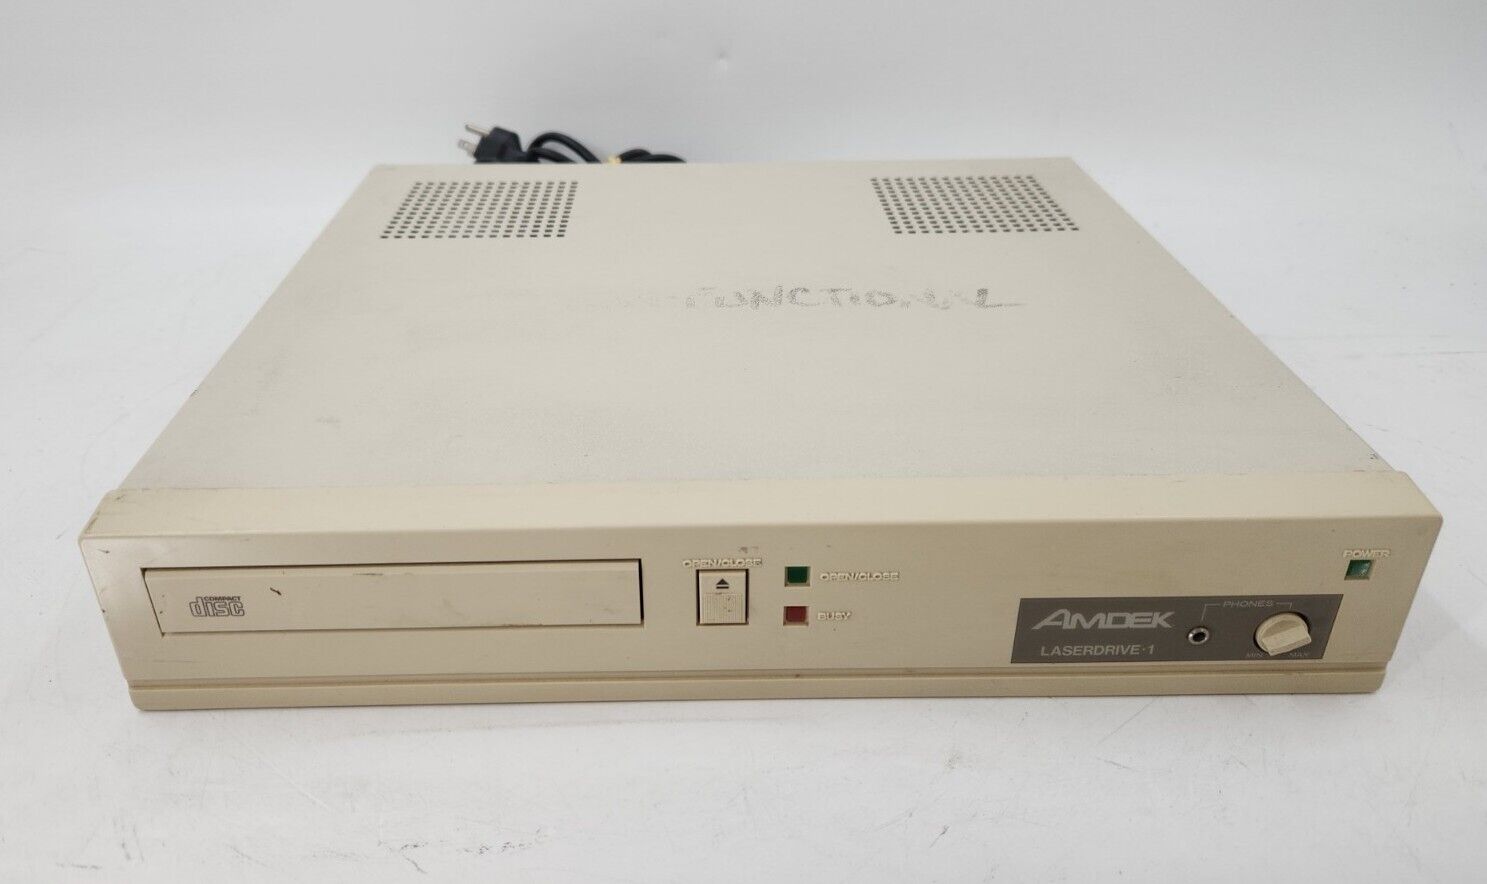 Amdek LaserDrive 1 LD-1 Rare Vintage 1987 CD-ROM Drive -AS IS- EB-14027